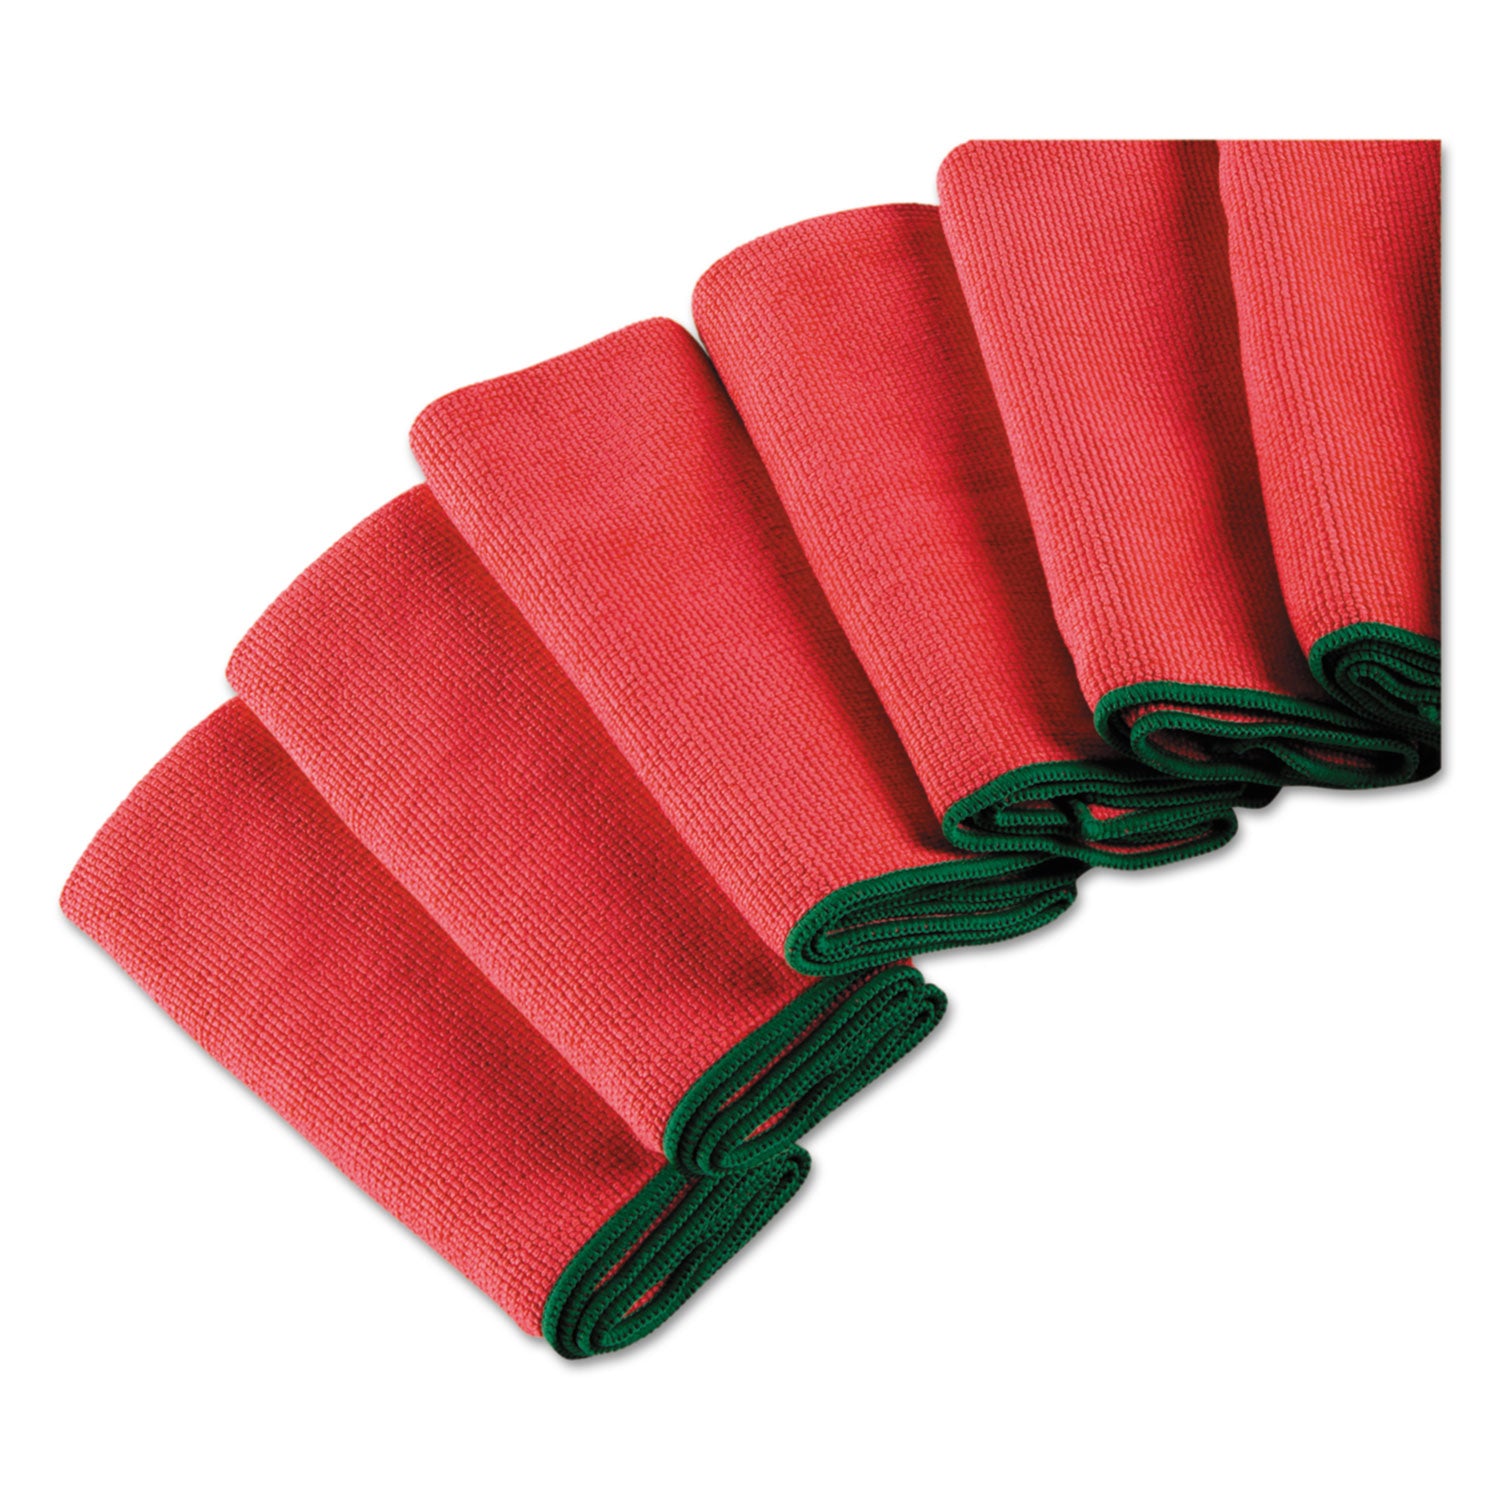 microfiber-cloths-reusable-1575-x-1575-red-6-pack-4-packs-carton_kcc83980 - 5